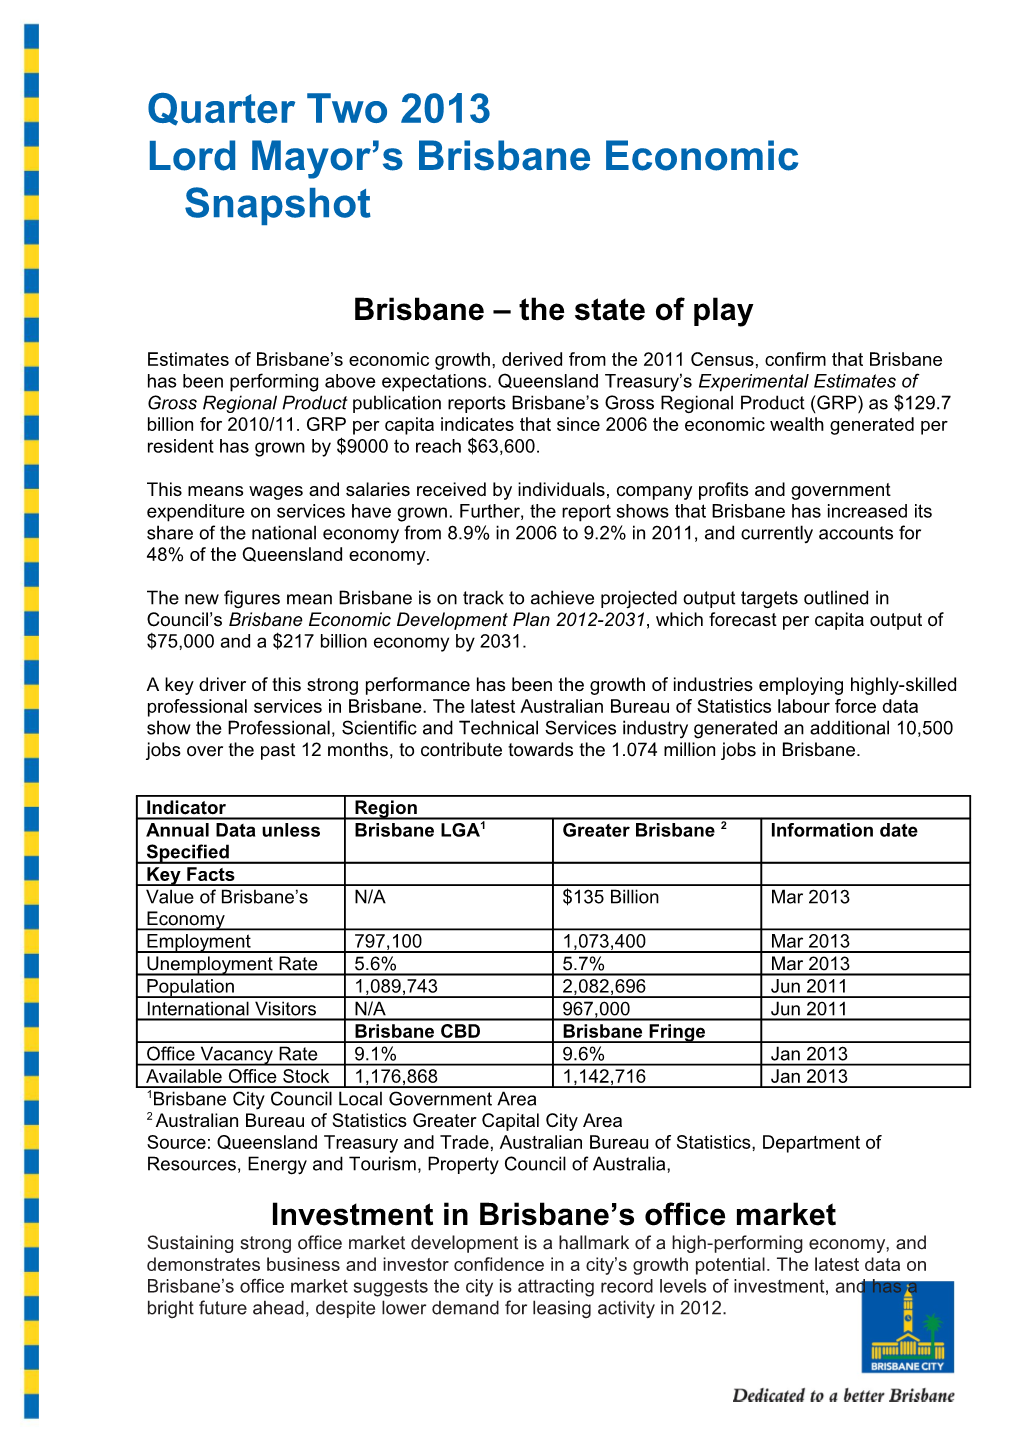 Lord Mayor S Brisbane Economic Snapshot